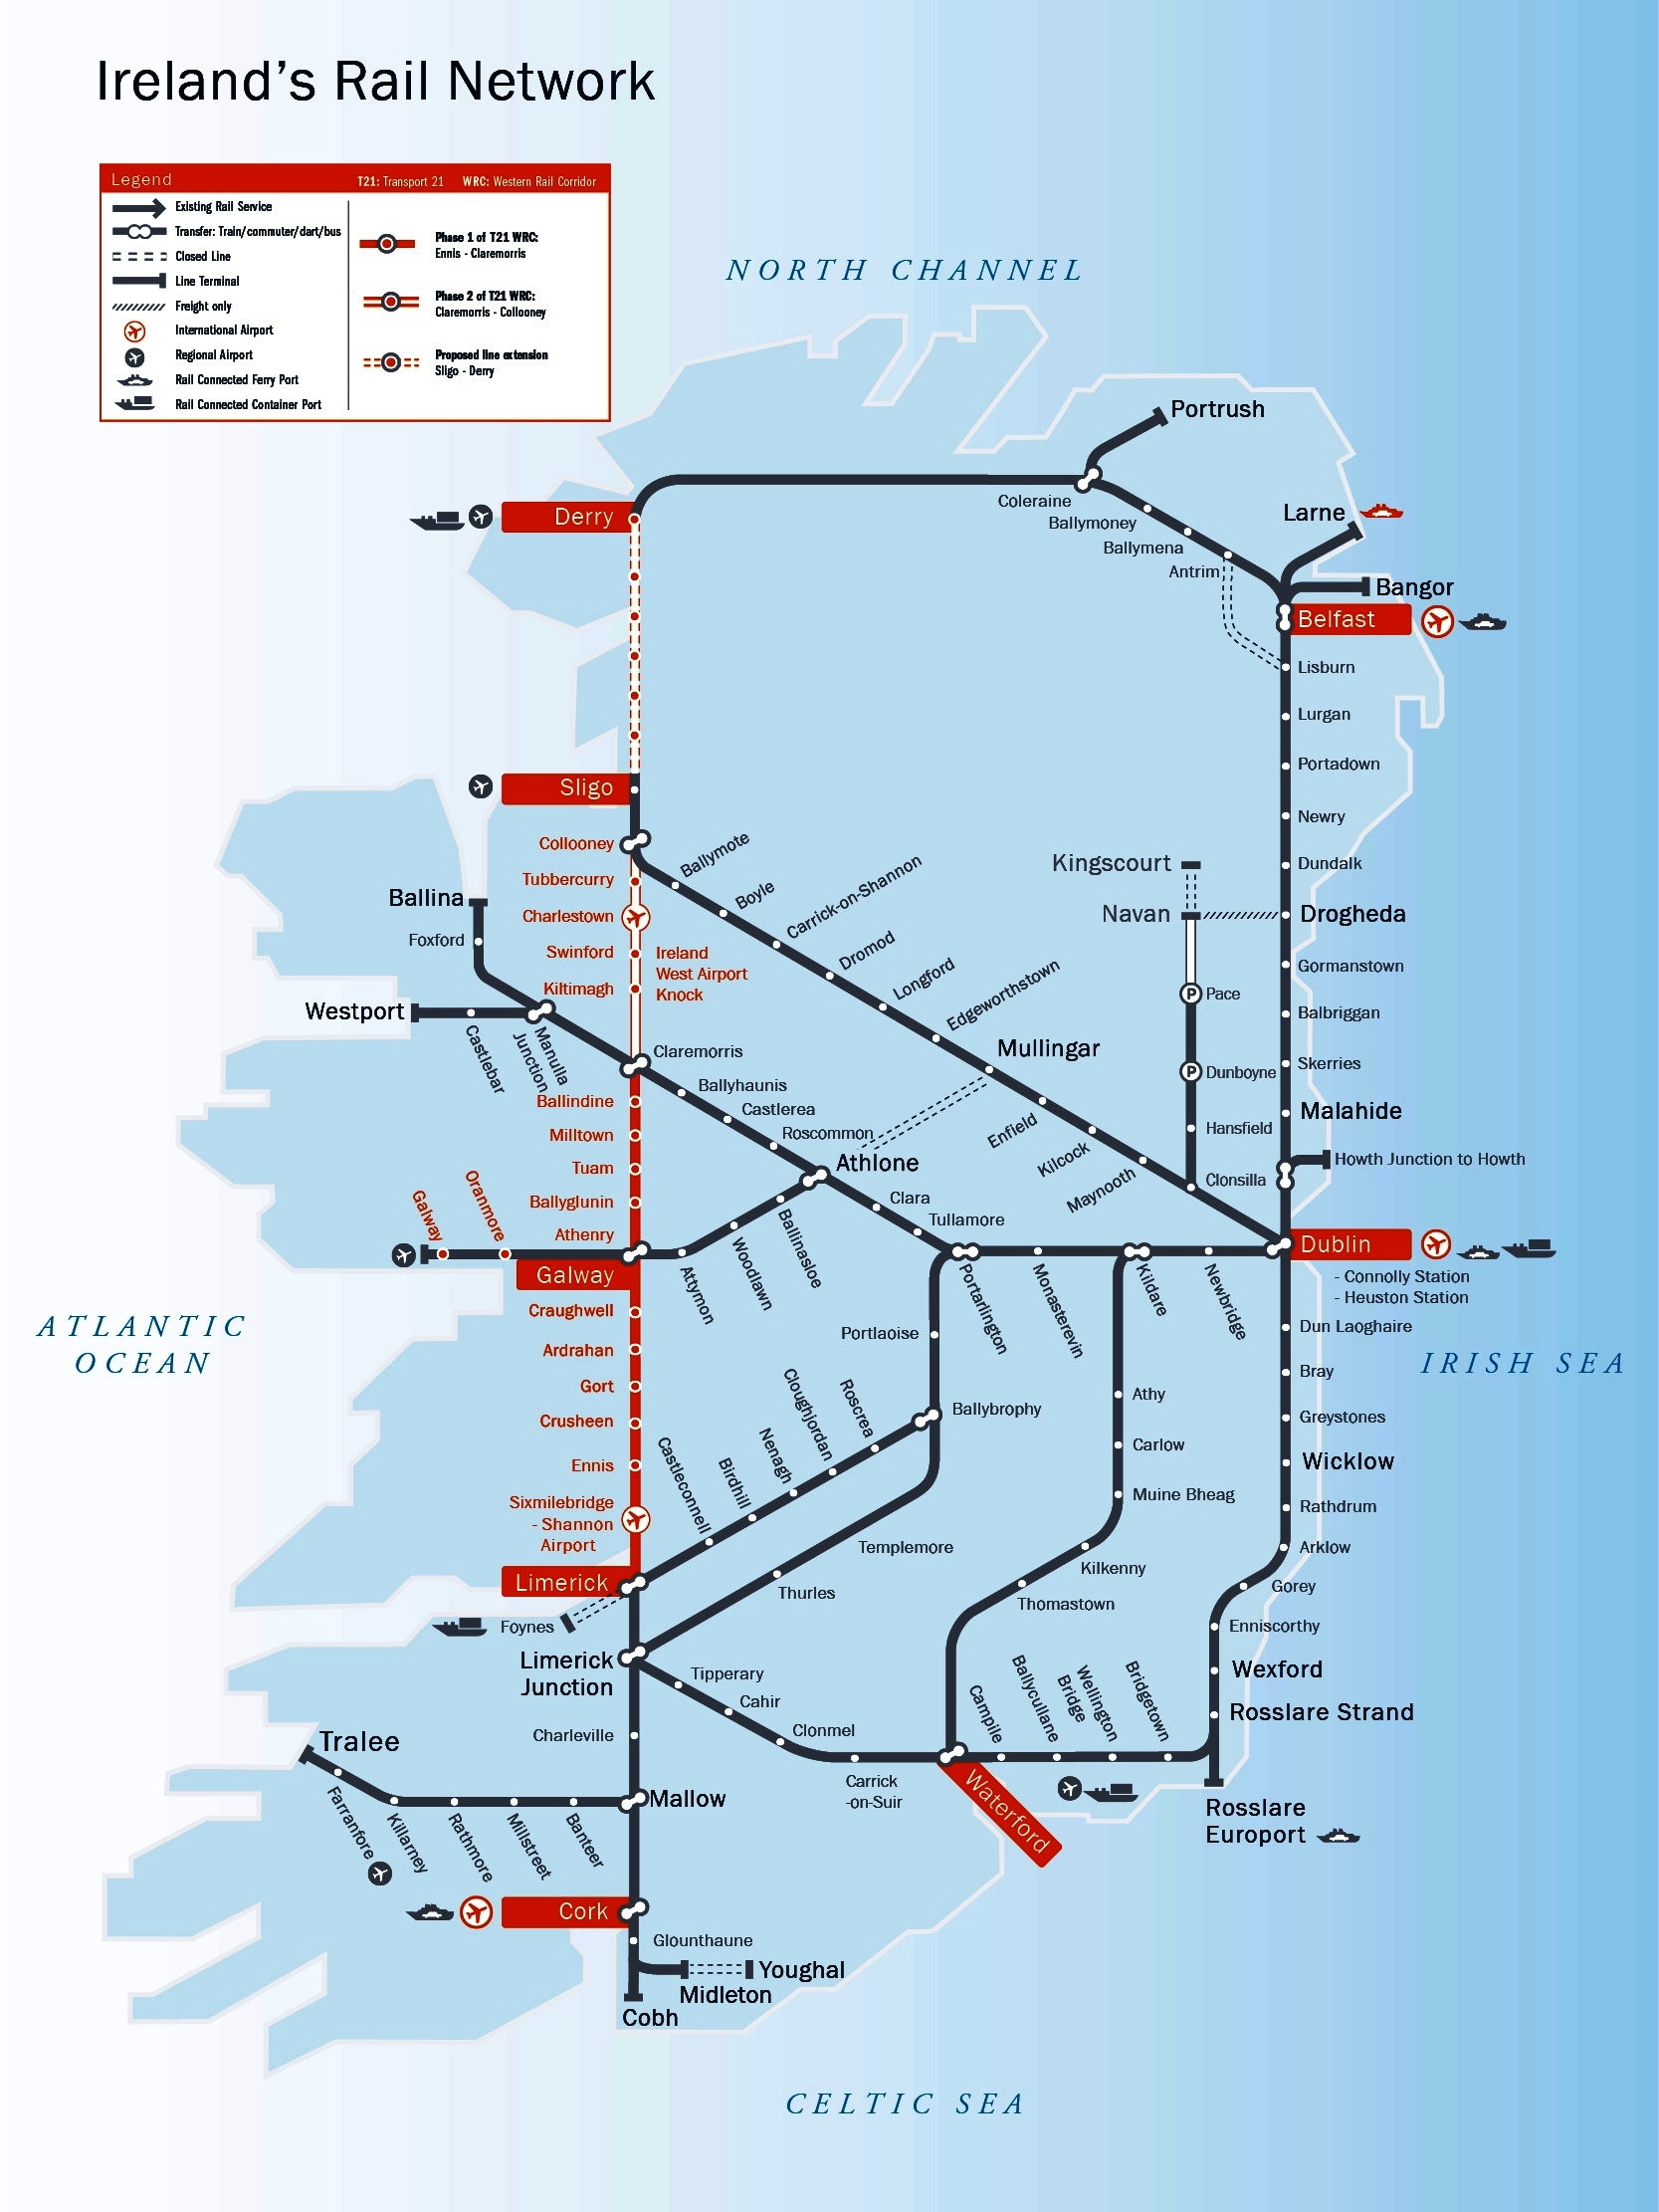 Claremorris On Dublin Westport Rail Line And Western Rail Corridor